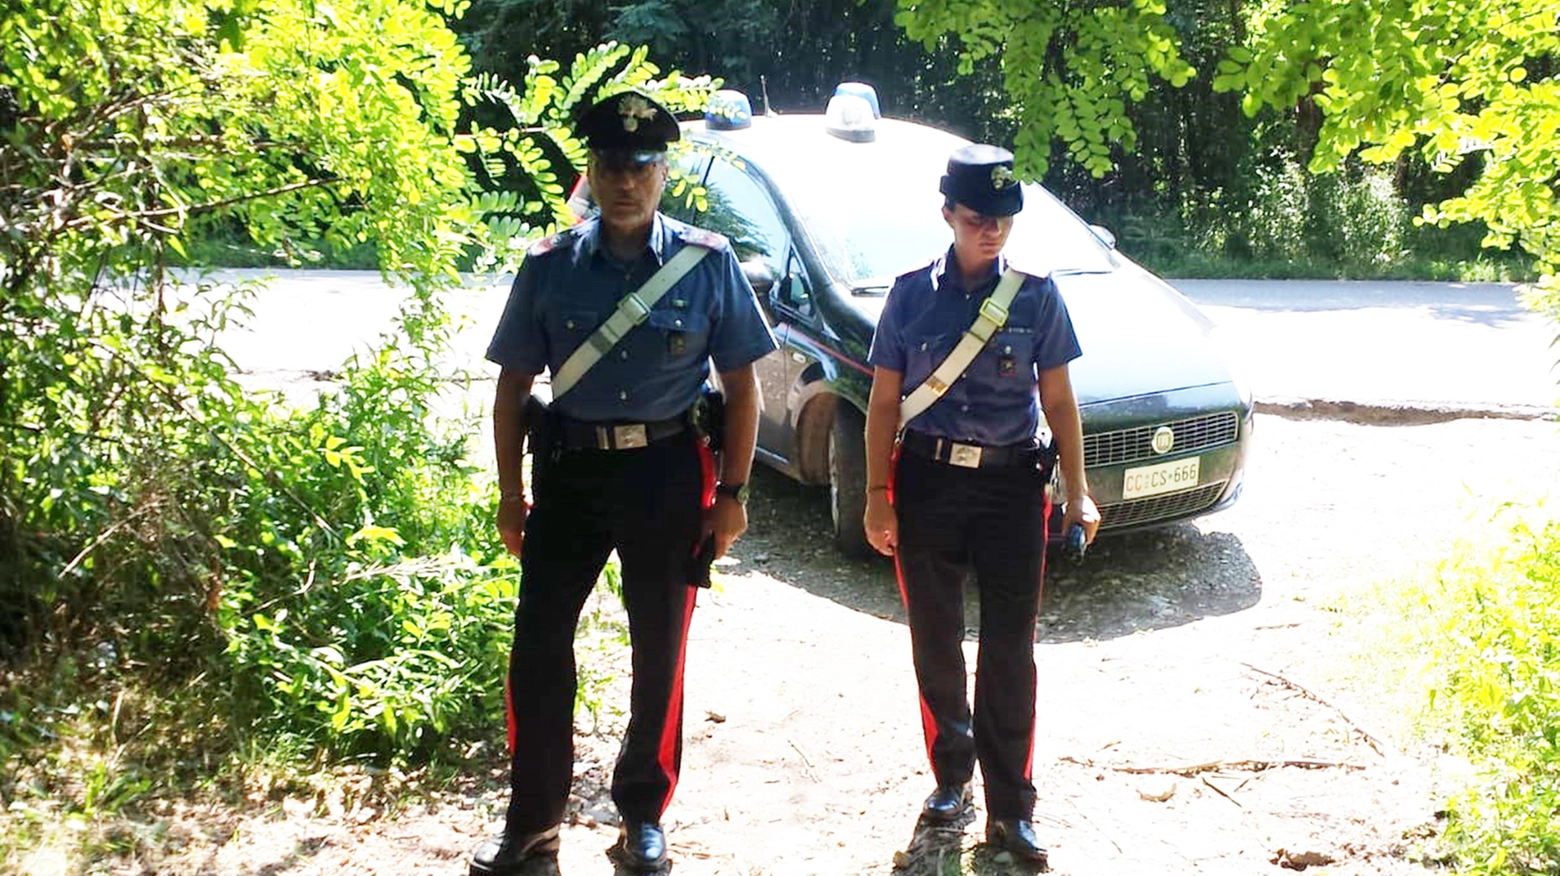 Controlli antidroga dei carabinieri